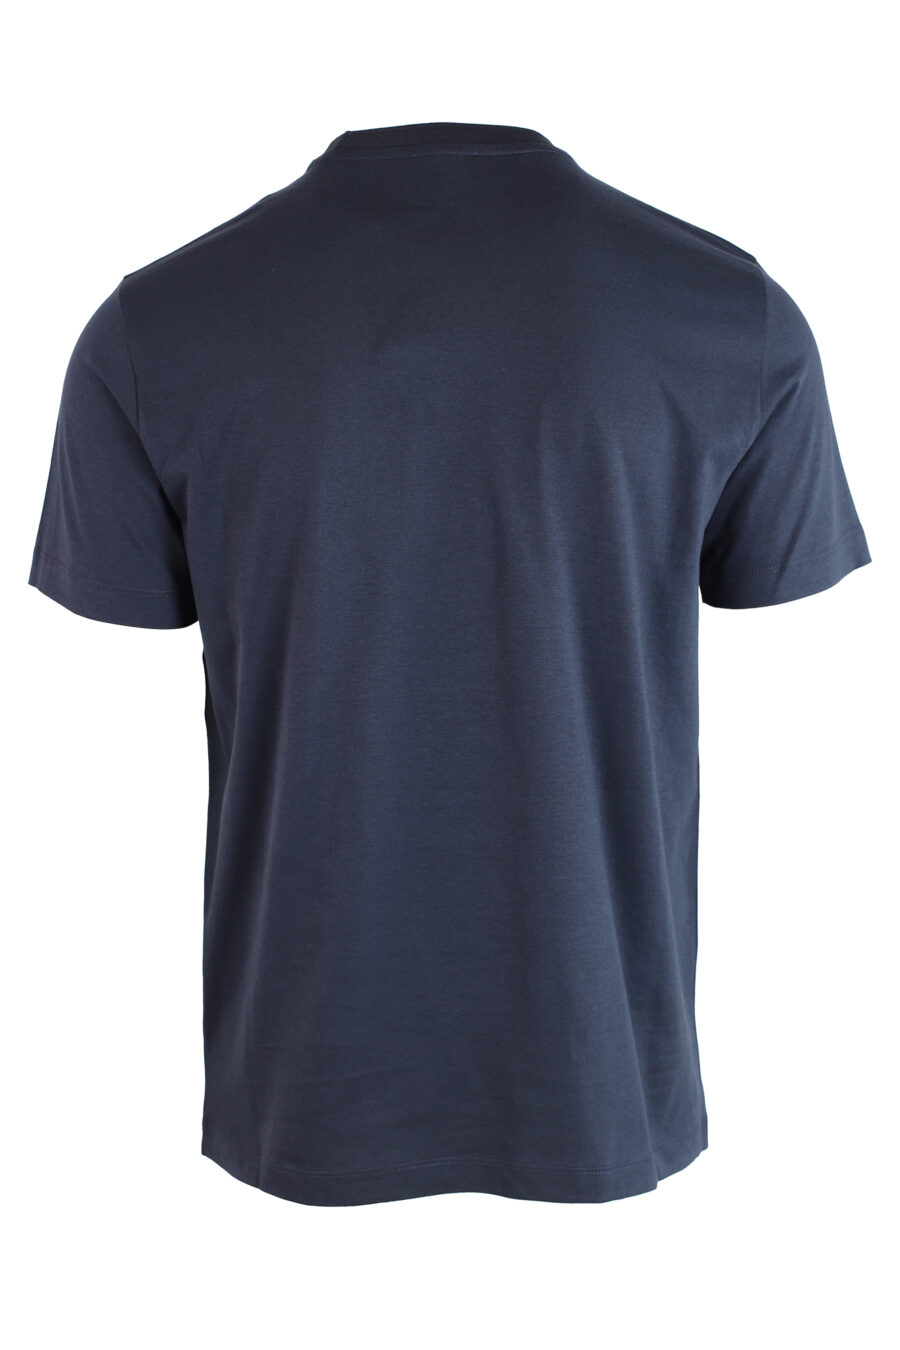 T-shirt bleu foncé avec mini logo en patch doré - IMG 3224